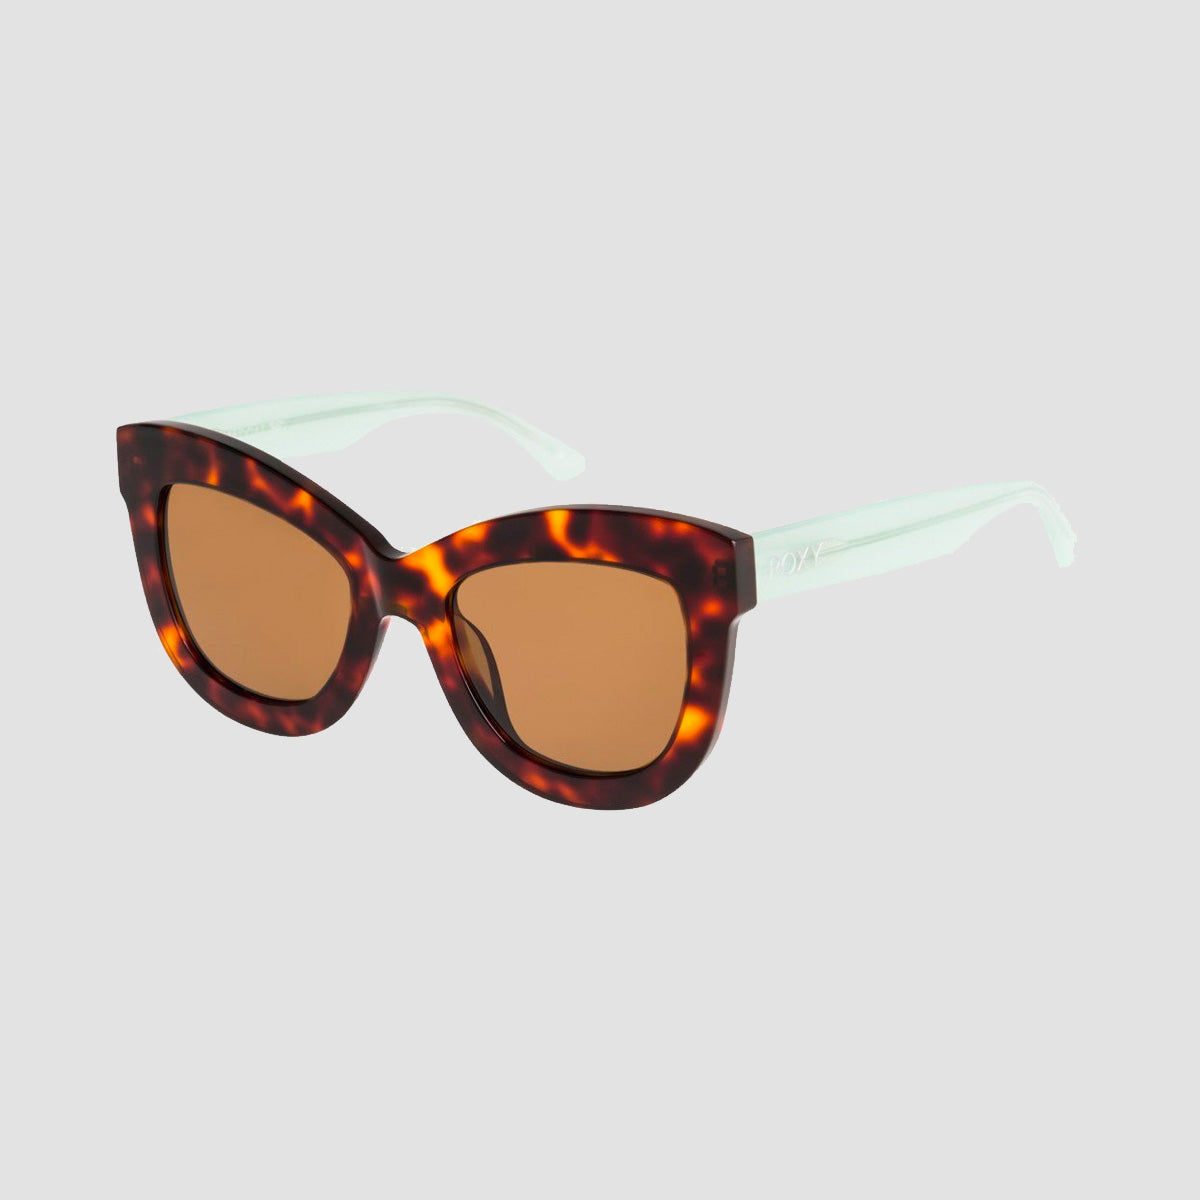 Roxy Madcat Sunglasses Brown Tortoise/Aqua/Brown - Womens